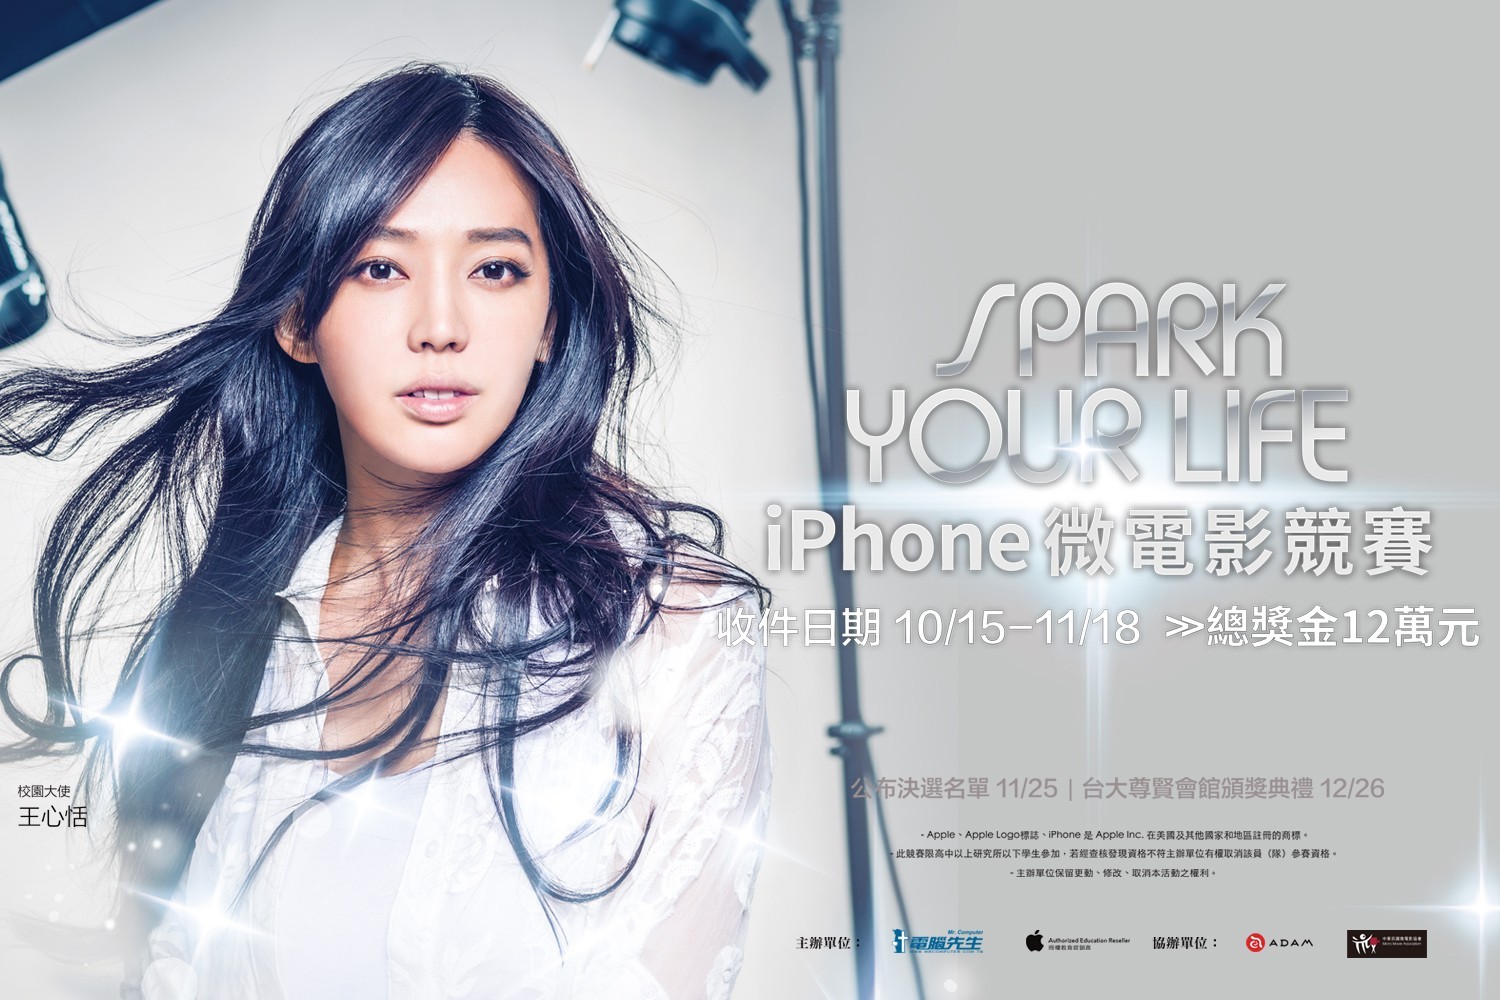 Spark Your Life! IPhone微電影競賽